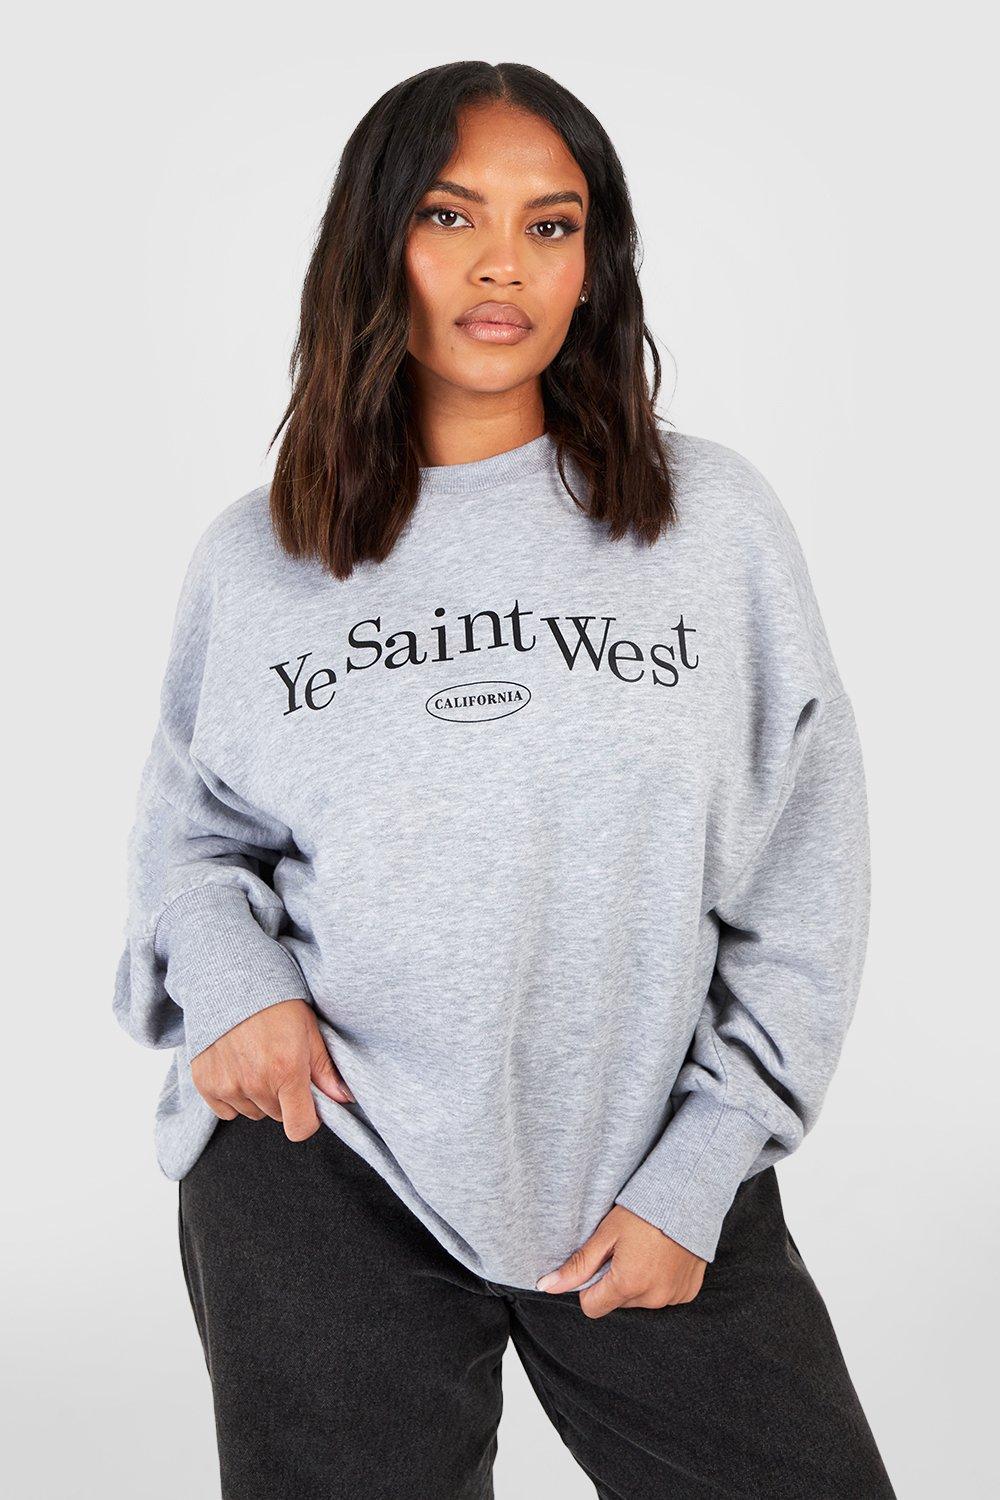 Plus - Ye Saint West Sweatshirt, Grey